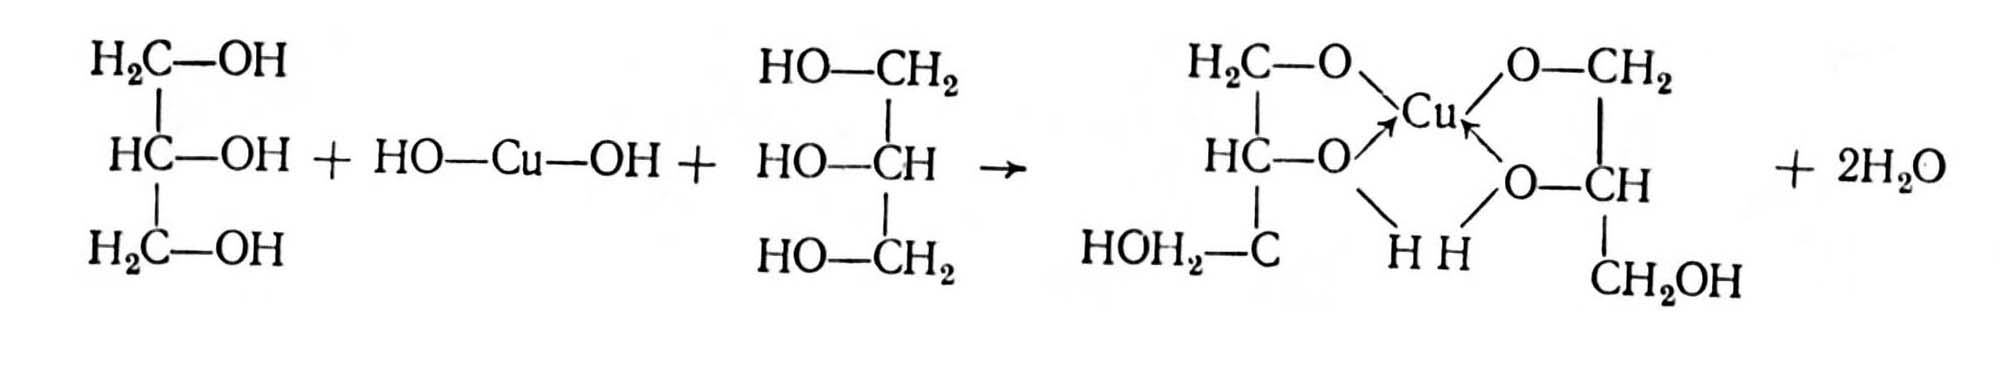 Глицерин сульфат меди 2. Глицин и гидроксид меди 2 реакция. Реакция глицинина с гидроксидом меди 2. Глицин плюс гидроксид меди 2. Глицин плюс сульфат меди 2.